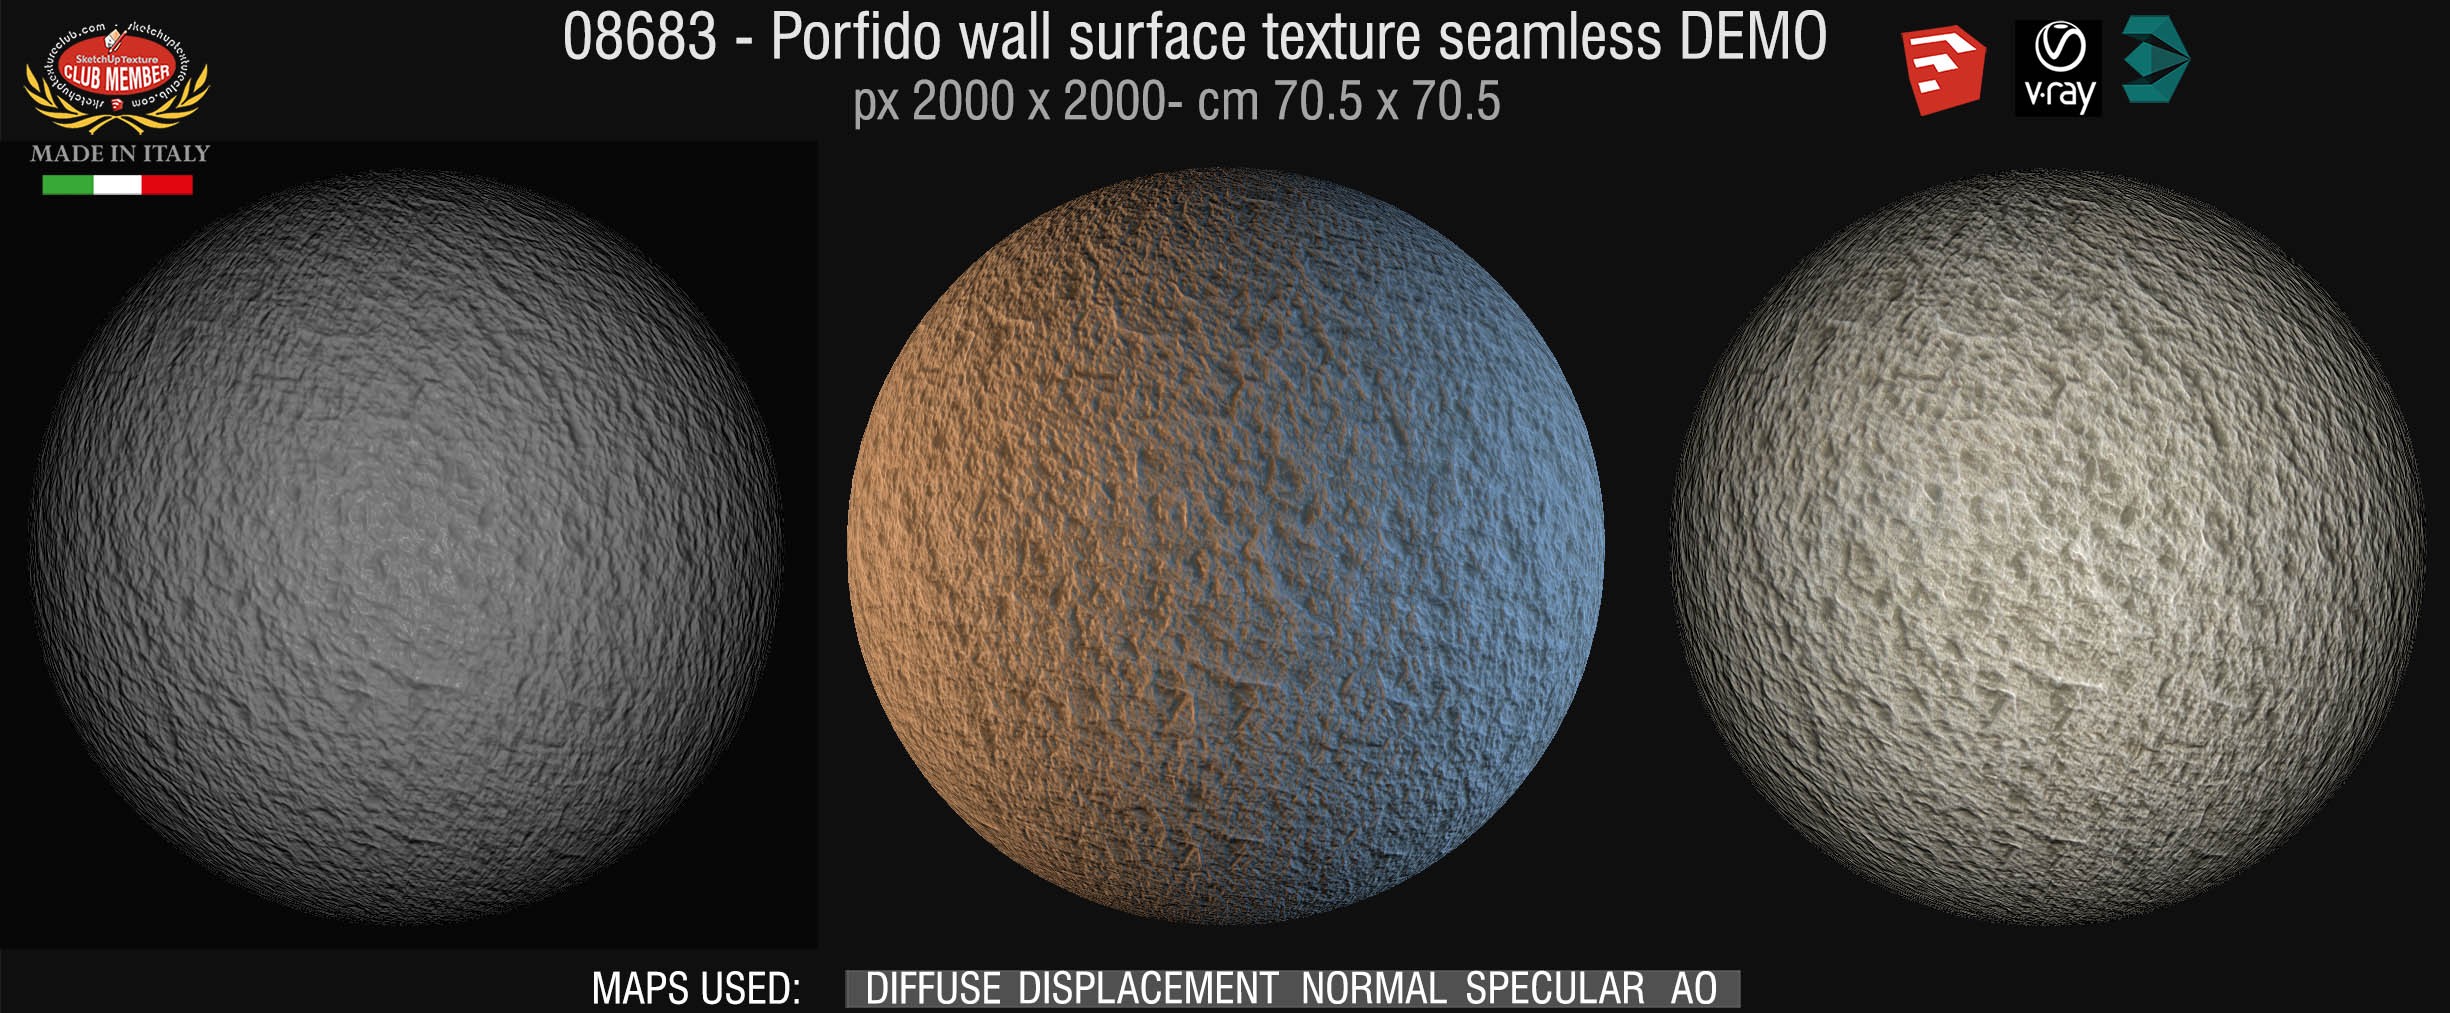 08383 Porfido wall surface texture seamless + maps DEMO